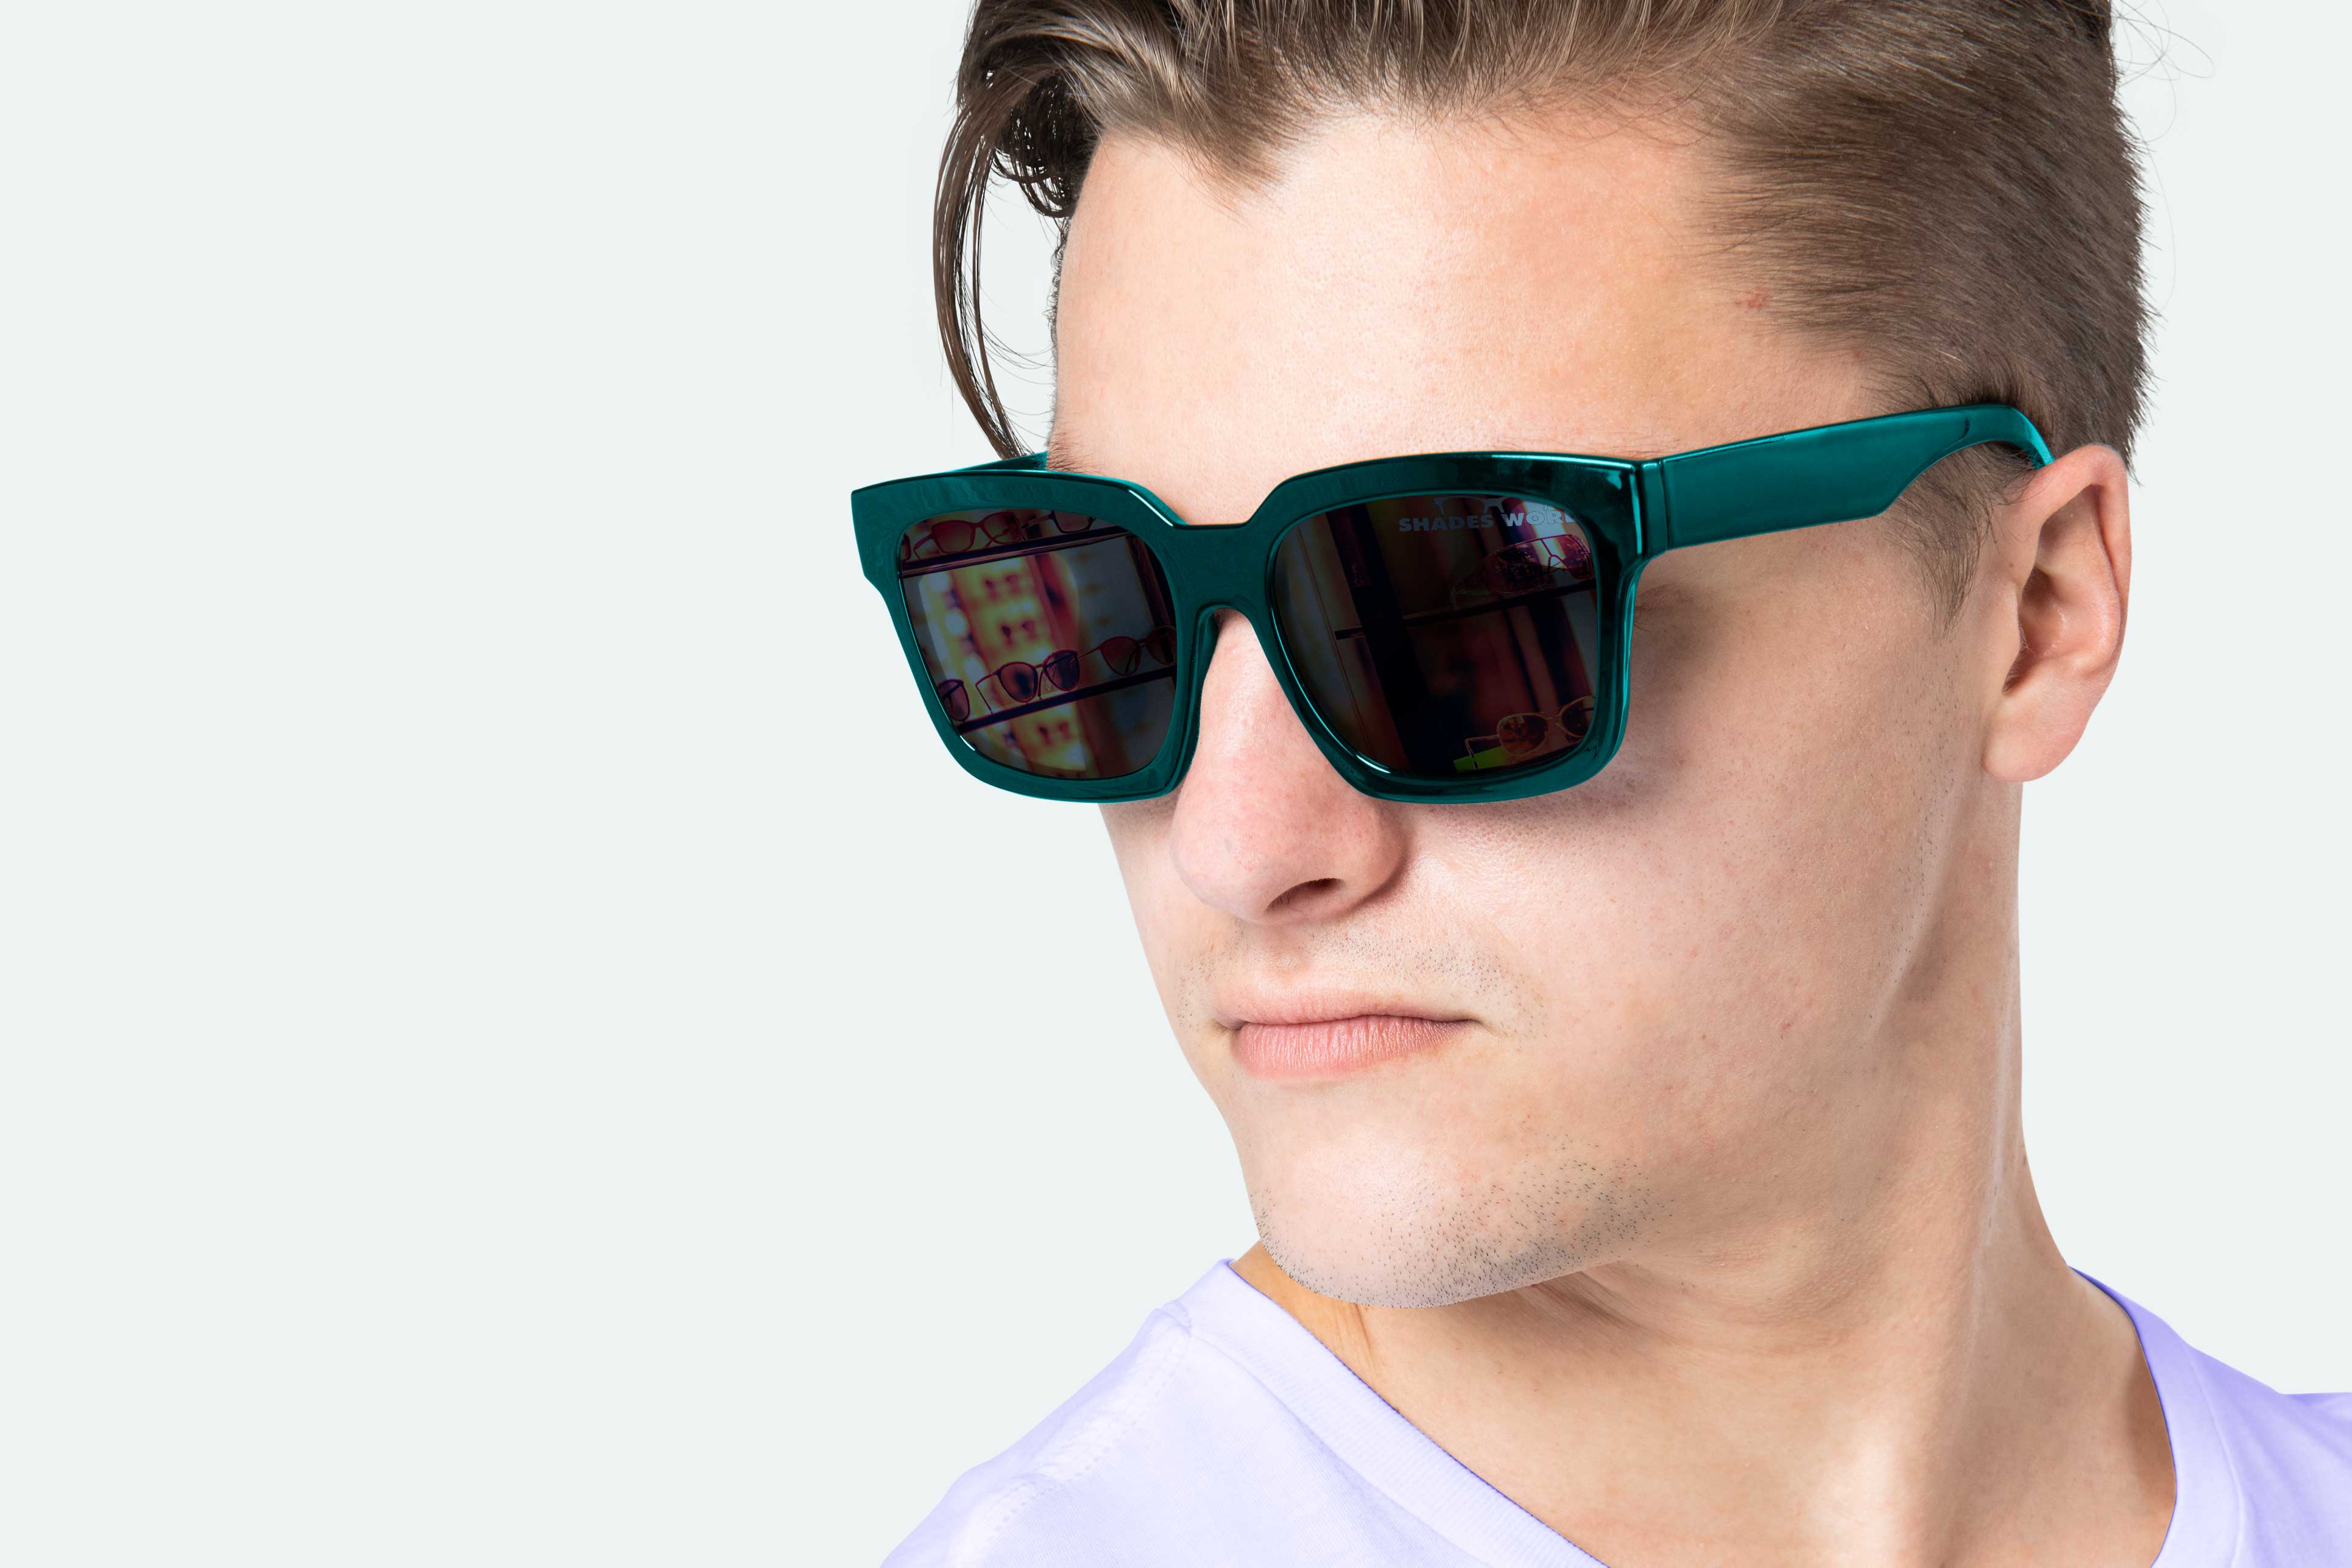 Shades World ® Sunglasses designed protection